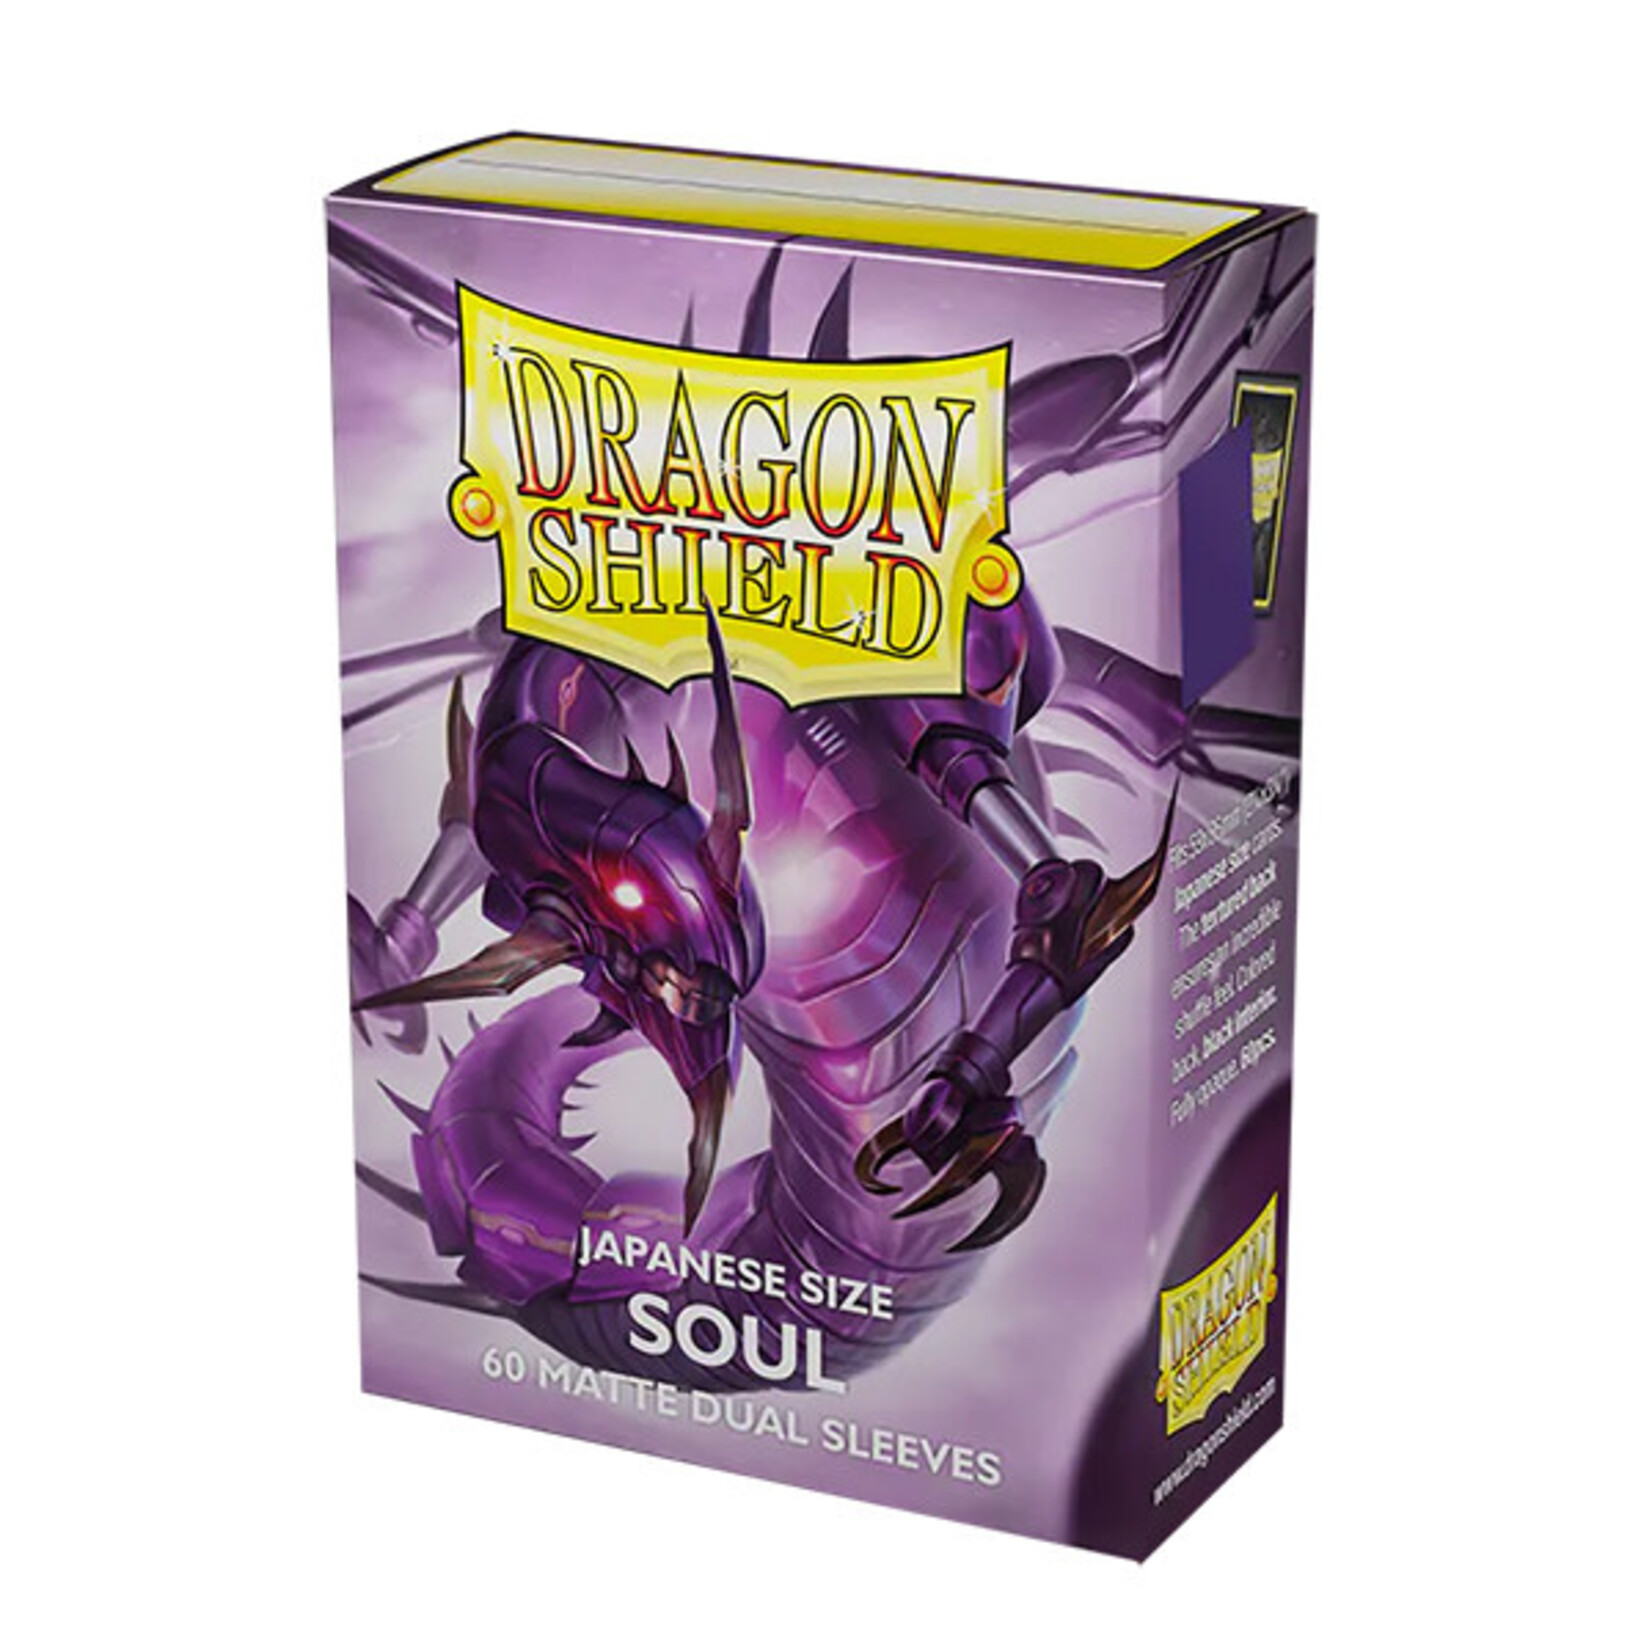 Arcane Tinmen Dragon Shield Japanese Card Sleeves - Dual Matte Soul (60)